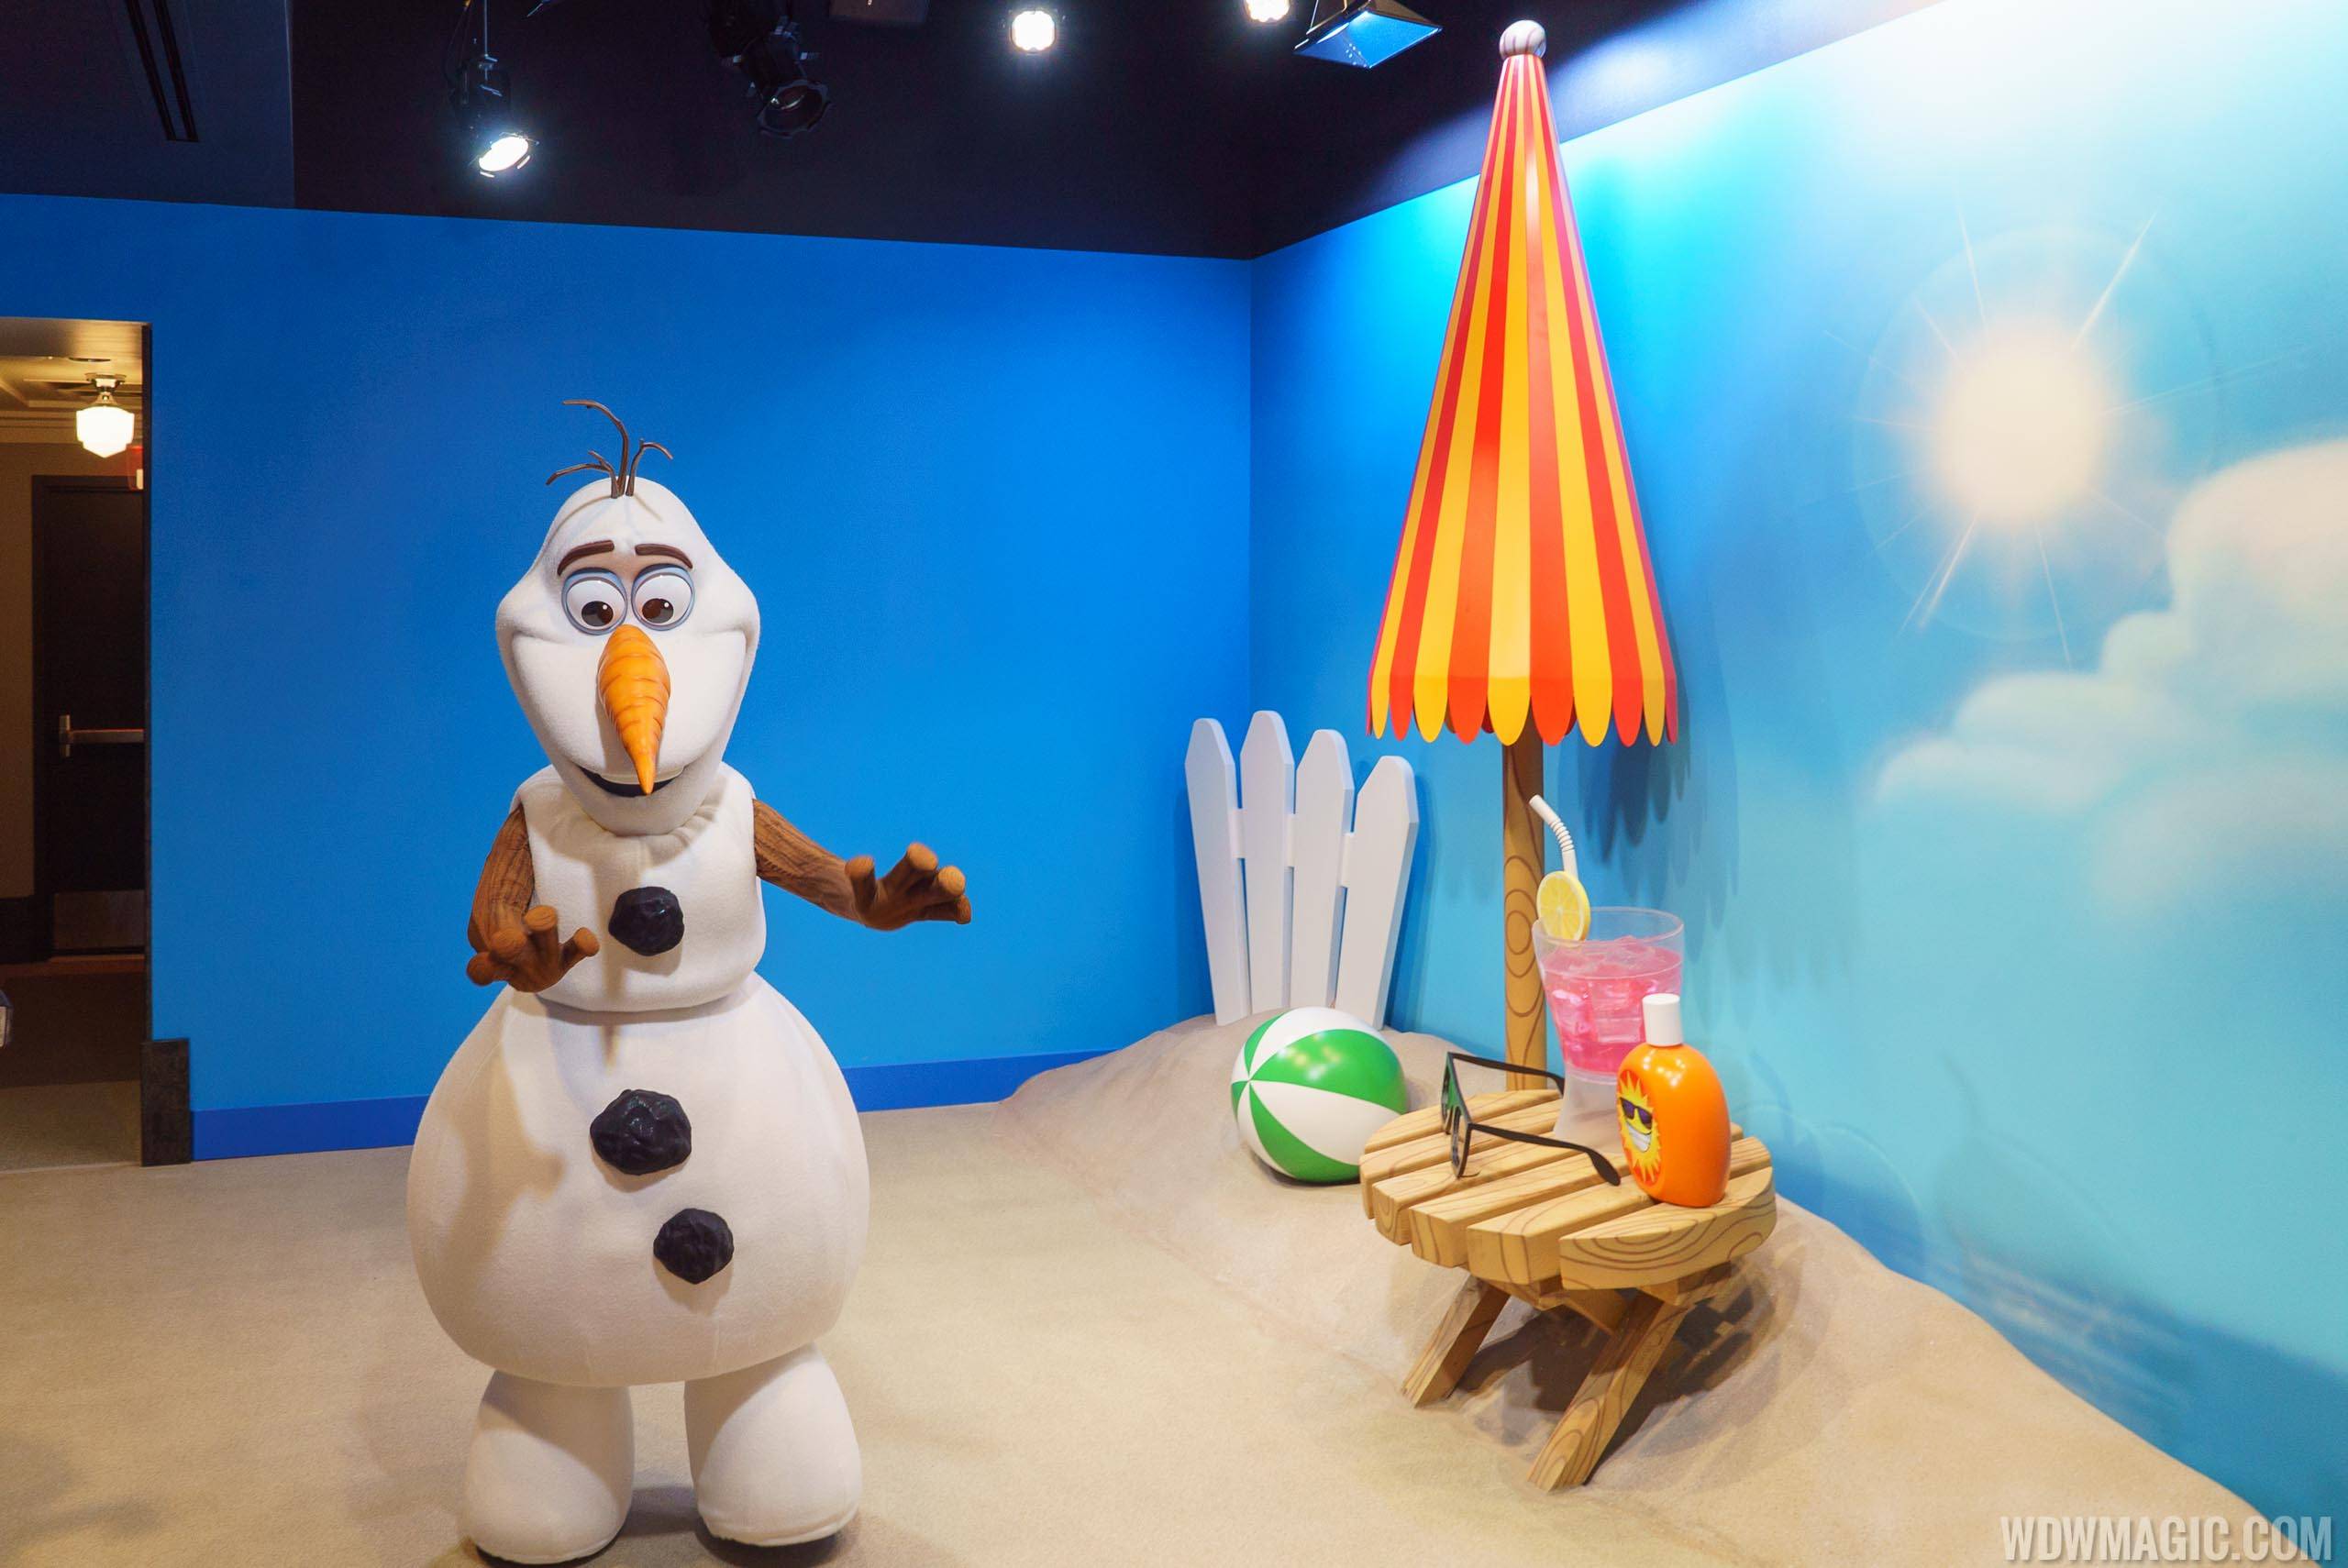 PHOTOS - Meet Olaf in the new Celebrity Spotlight at Disney's Hollywood Studios